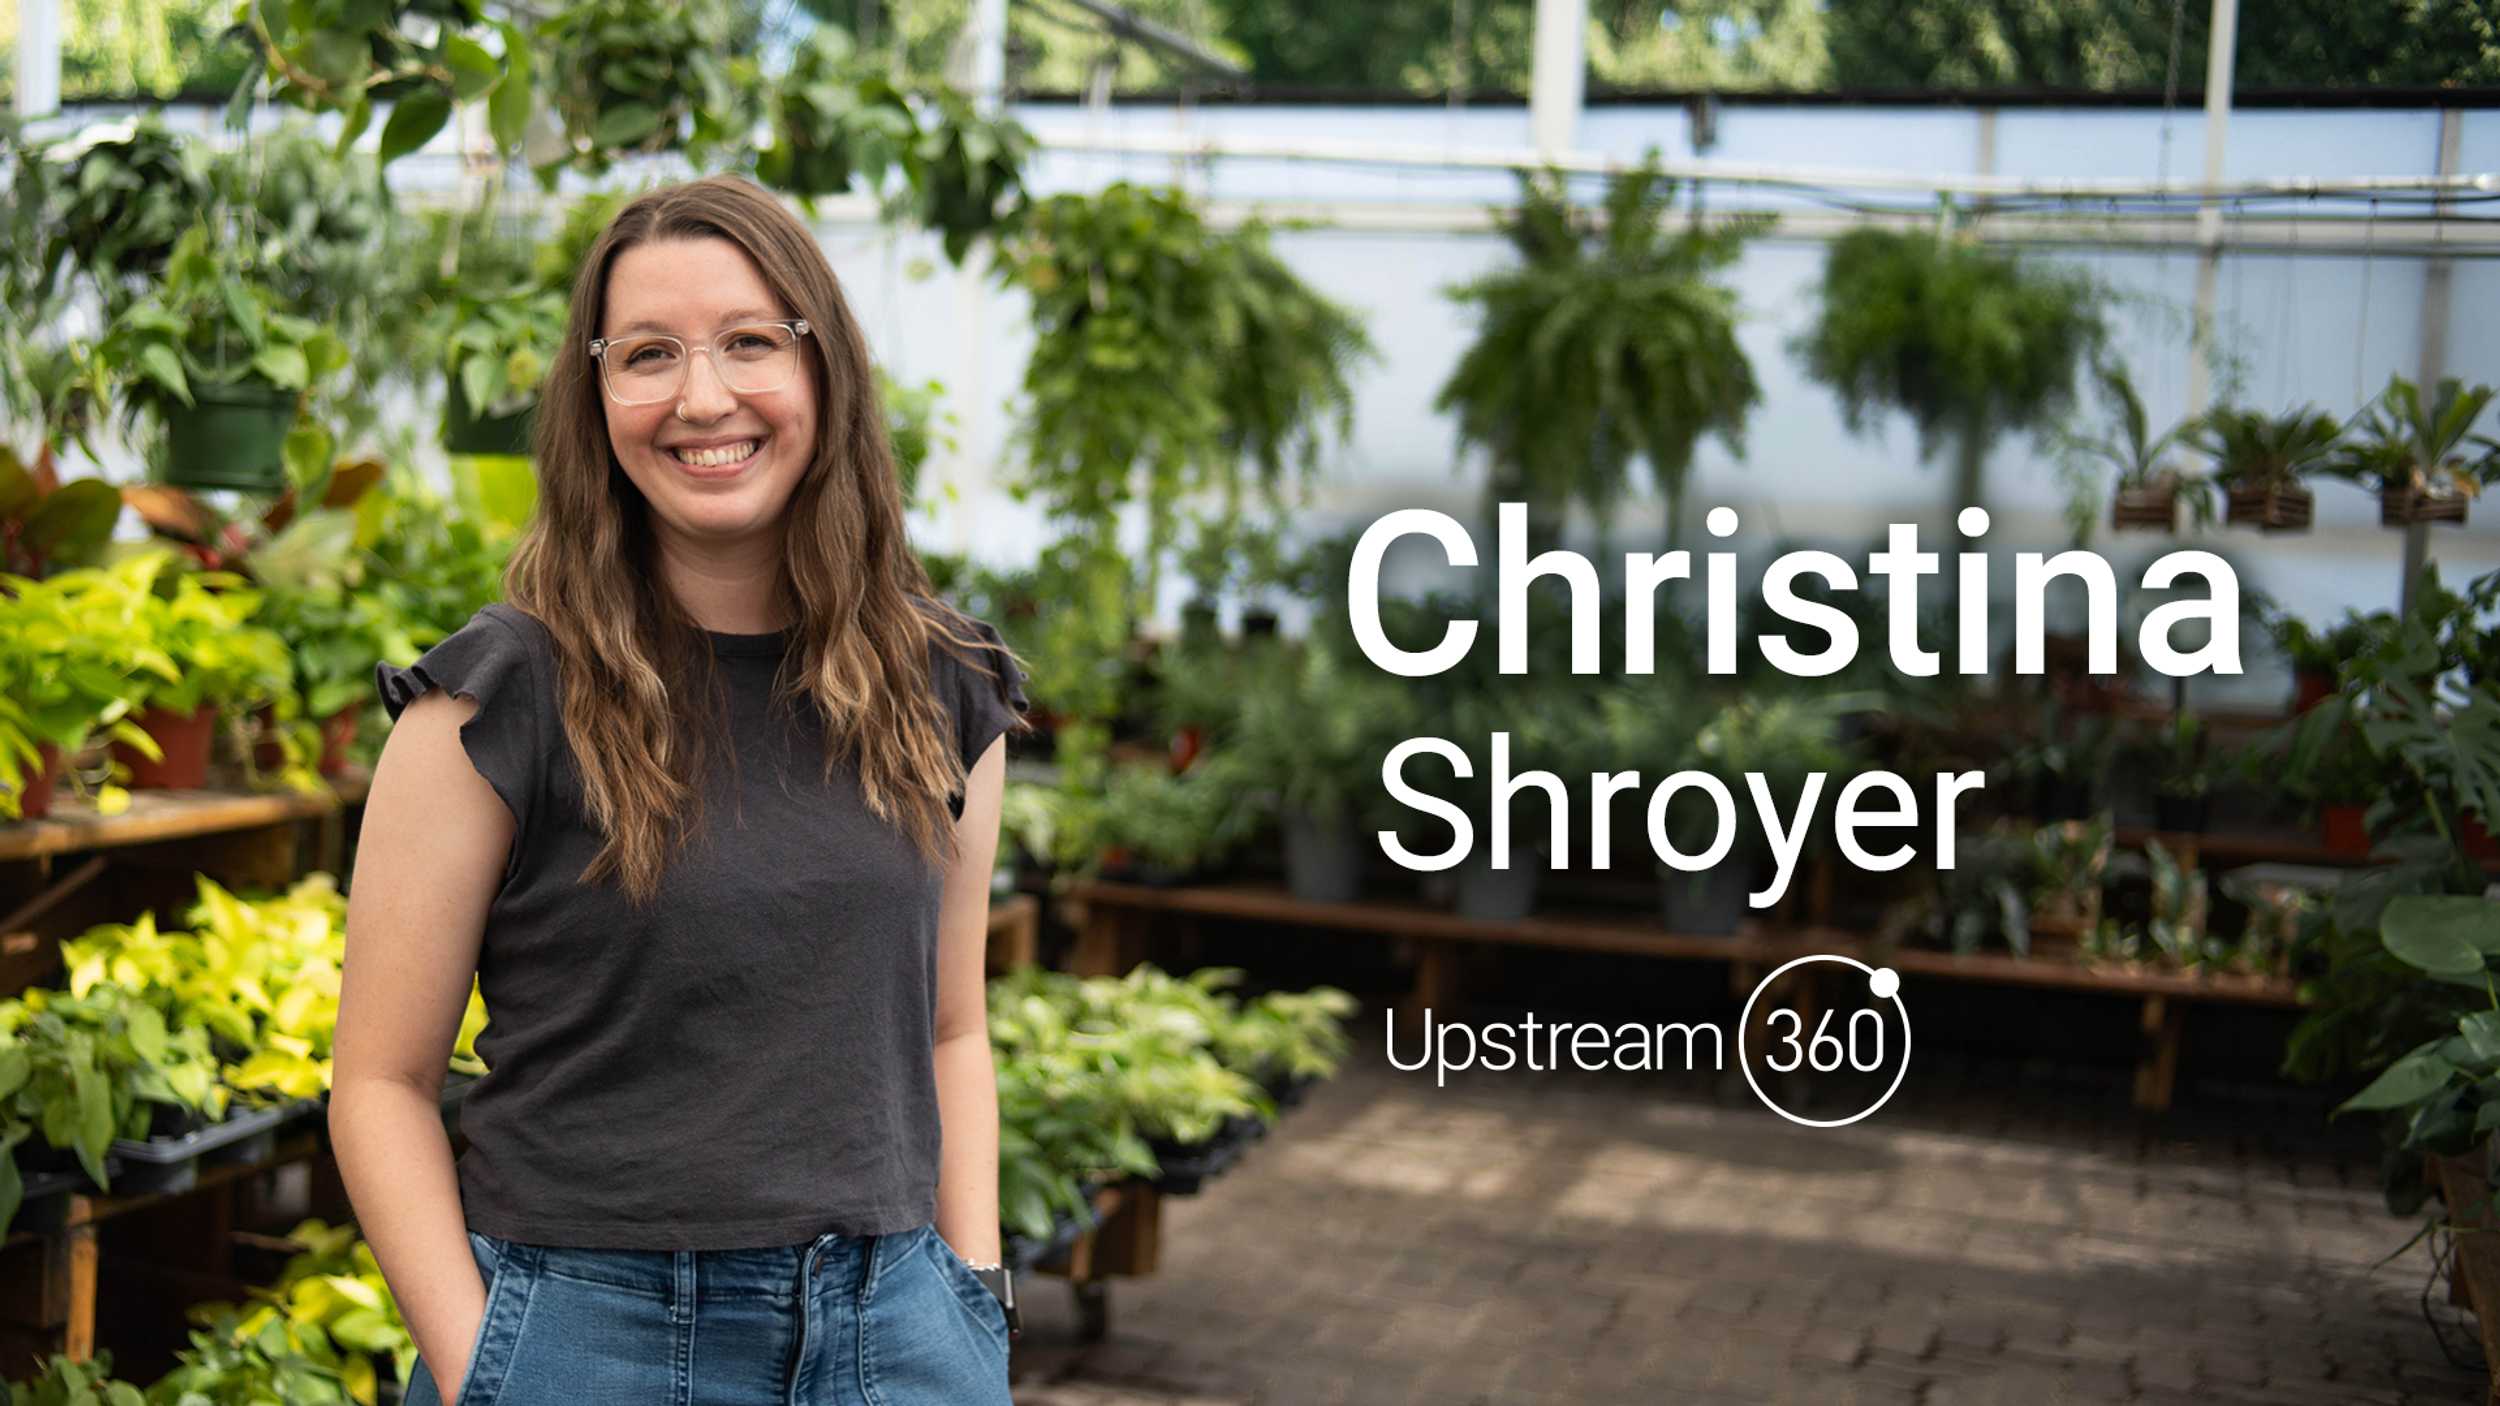 Meet Christina Shroyer: Graphic Design Lead